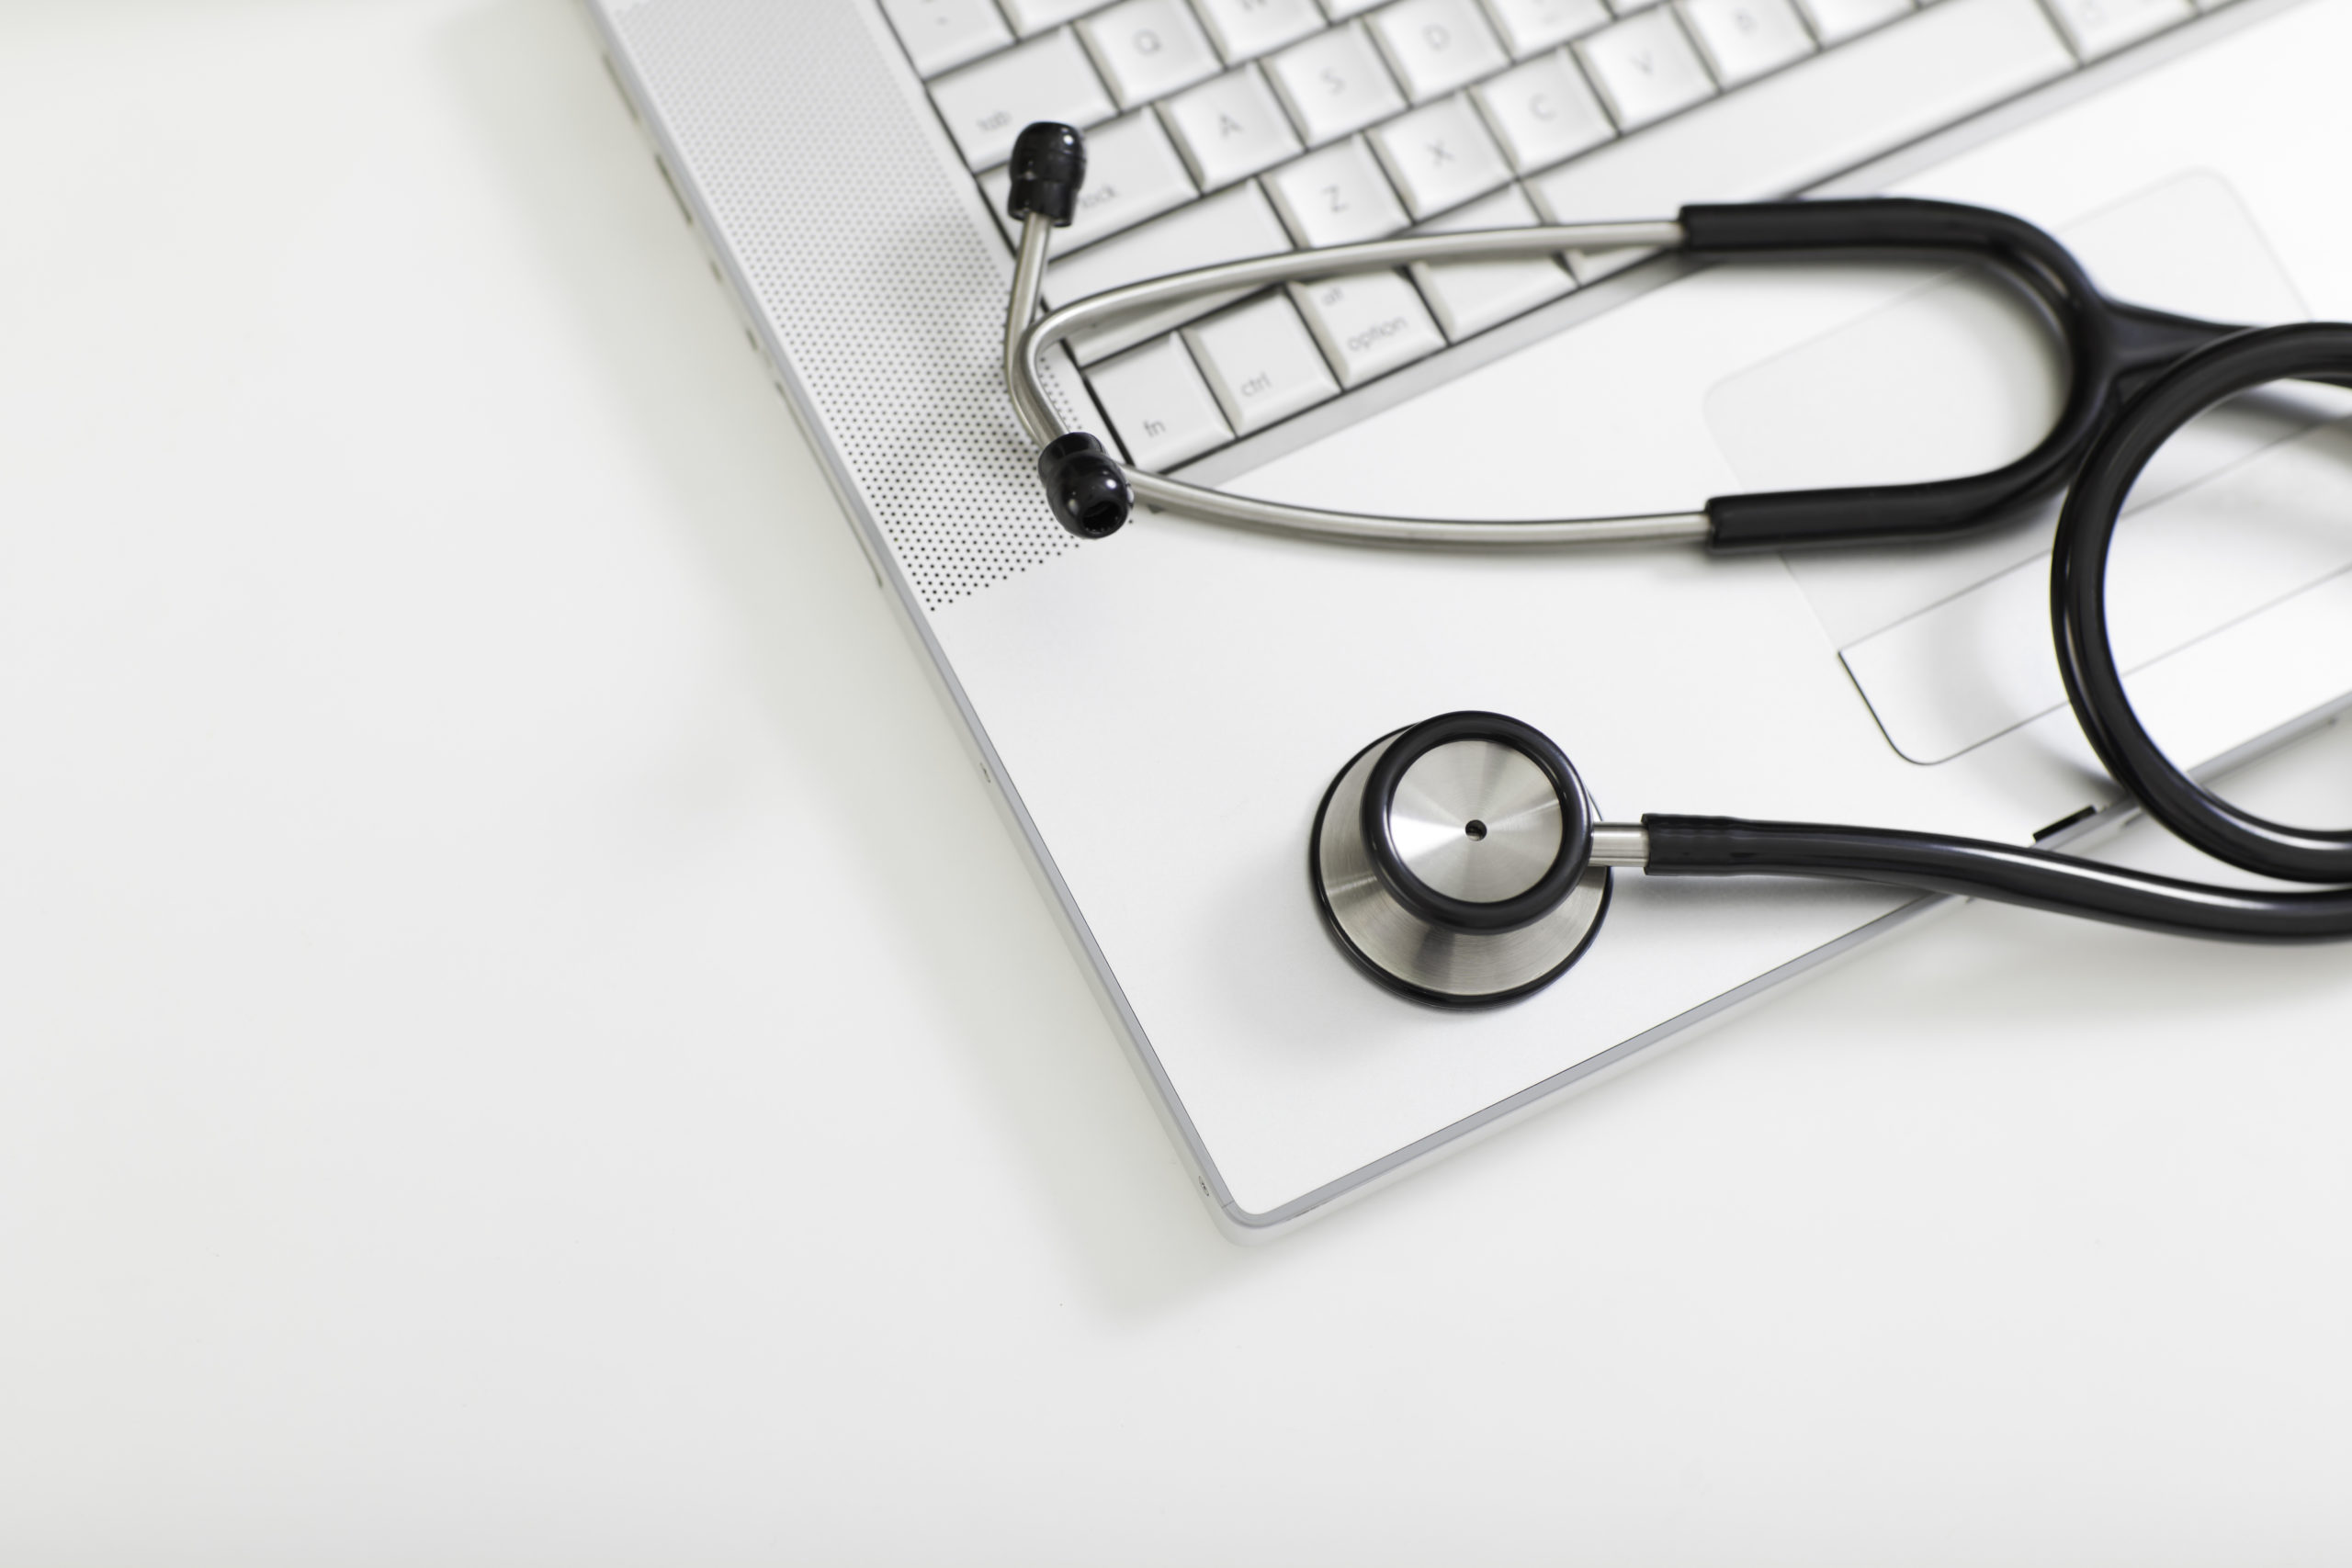 Medical stethoscope with laptop on white background